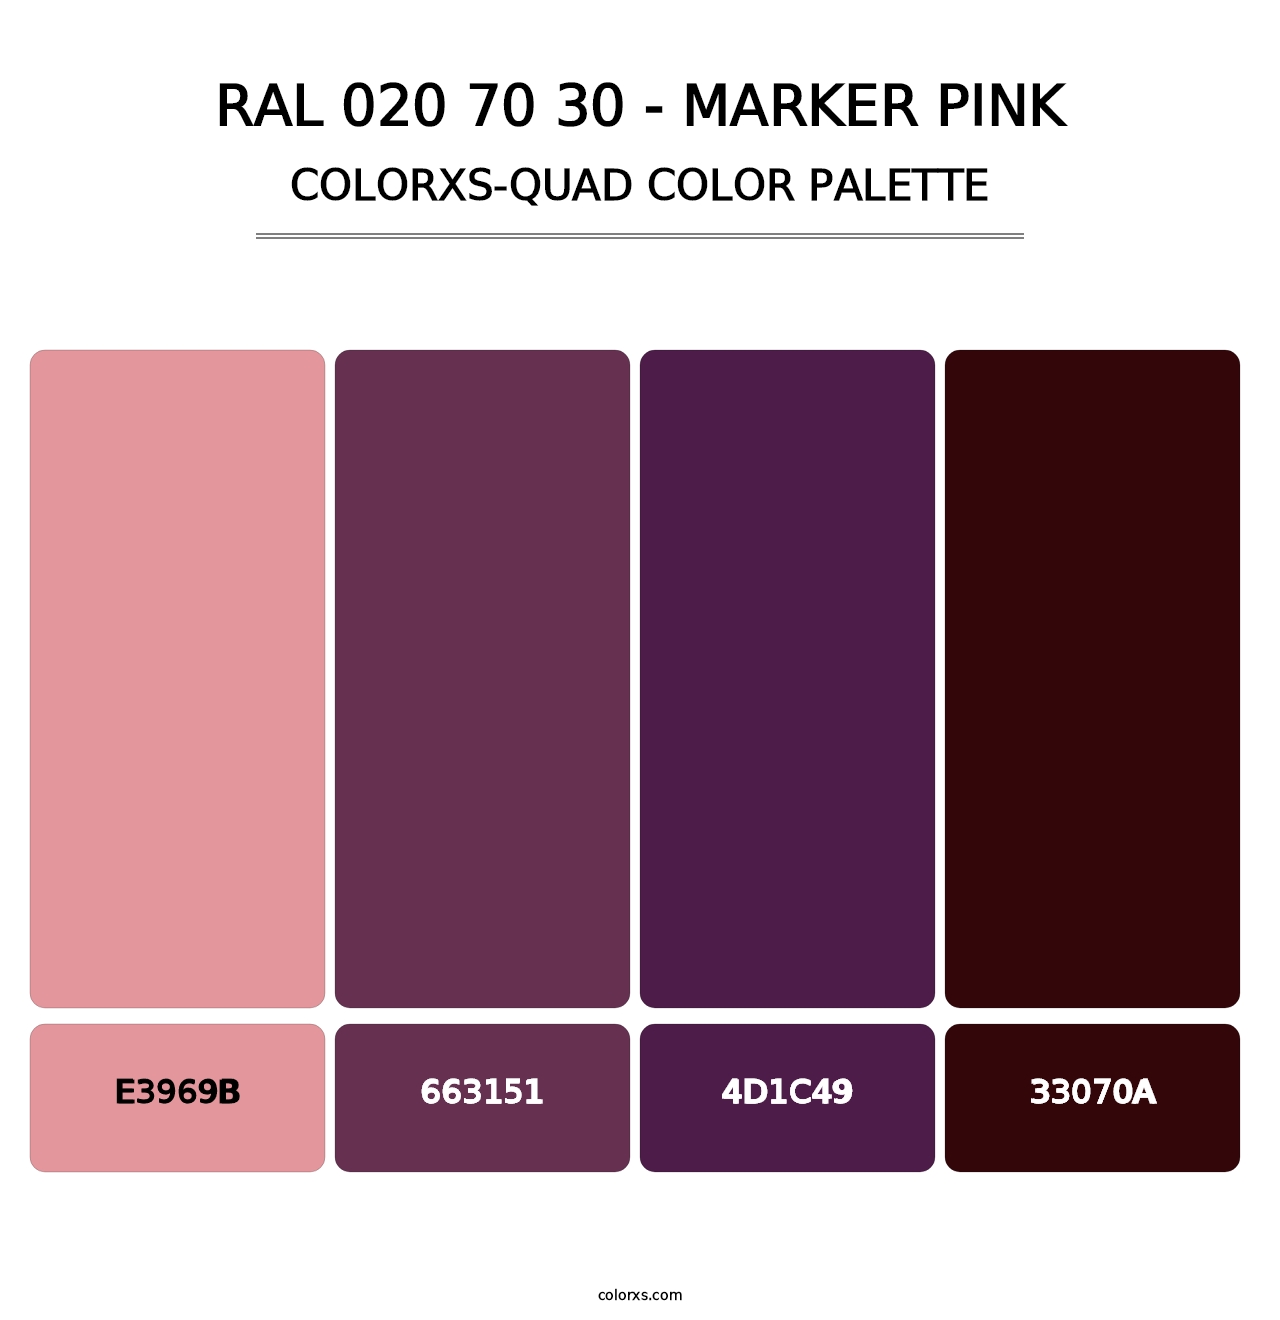 RAL 020 70 30 - Marker Pink - Colorxs Quad Palette